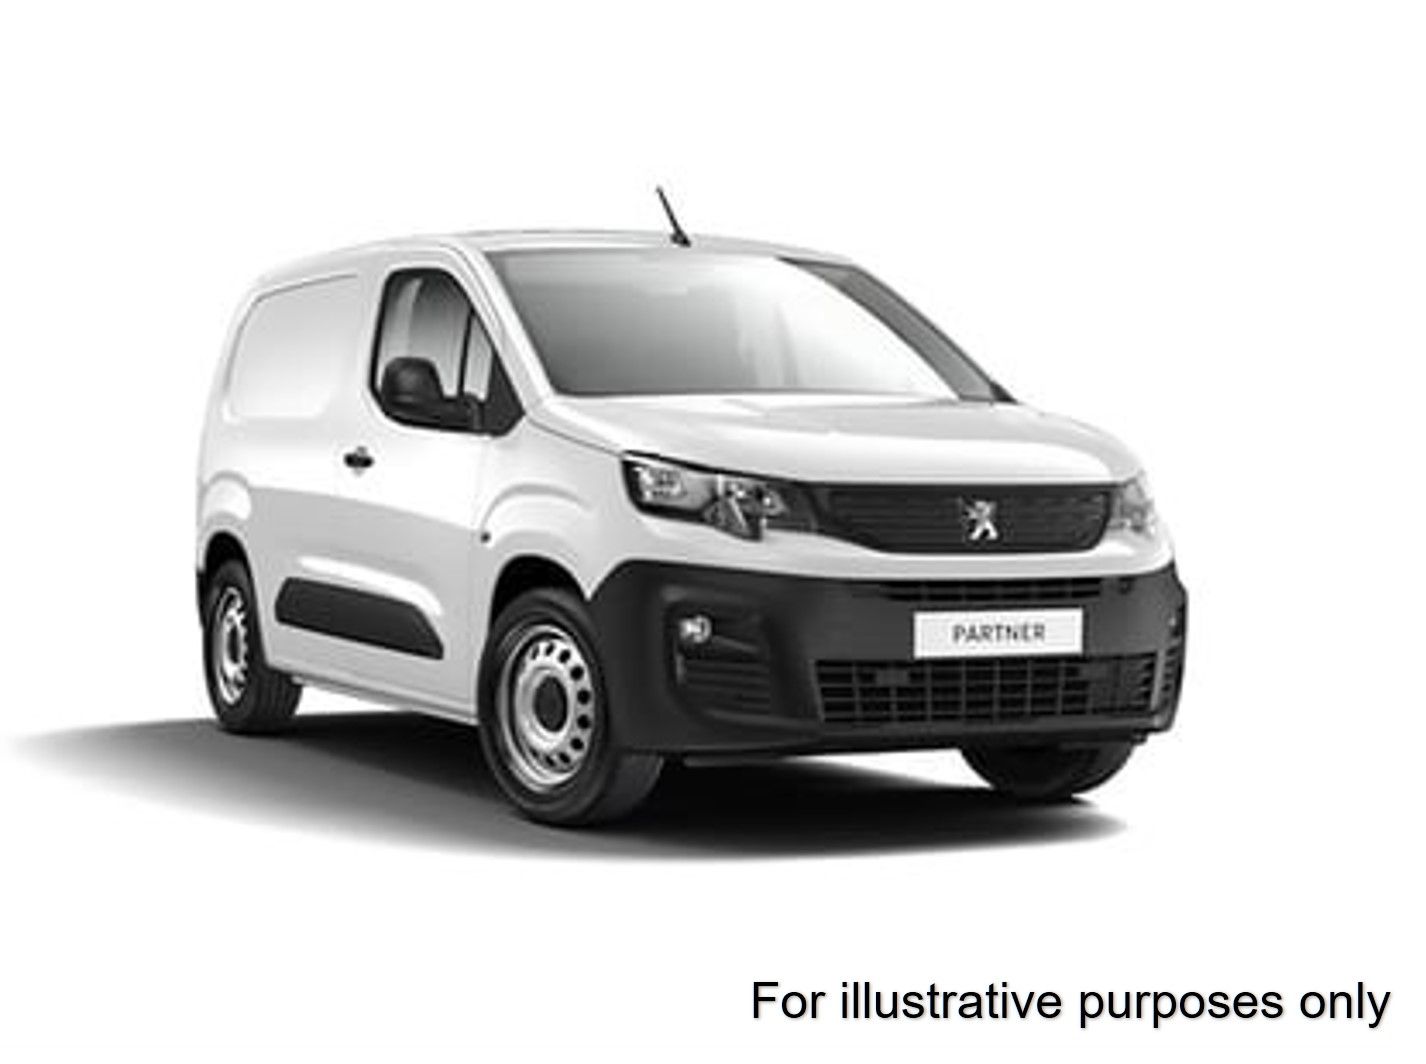 2019 Peugeot Partner 1000 1.6 Bluehdi 100 Professional Van (FE19PDZ)